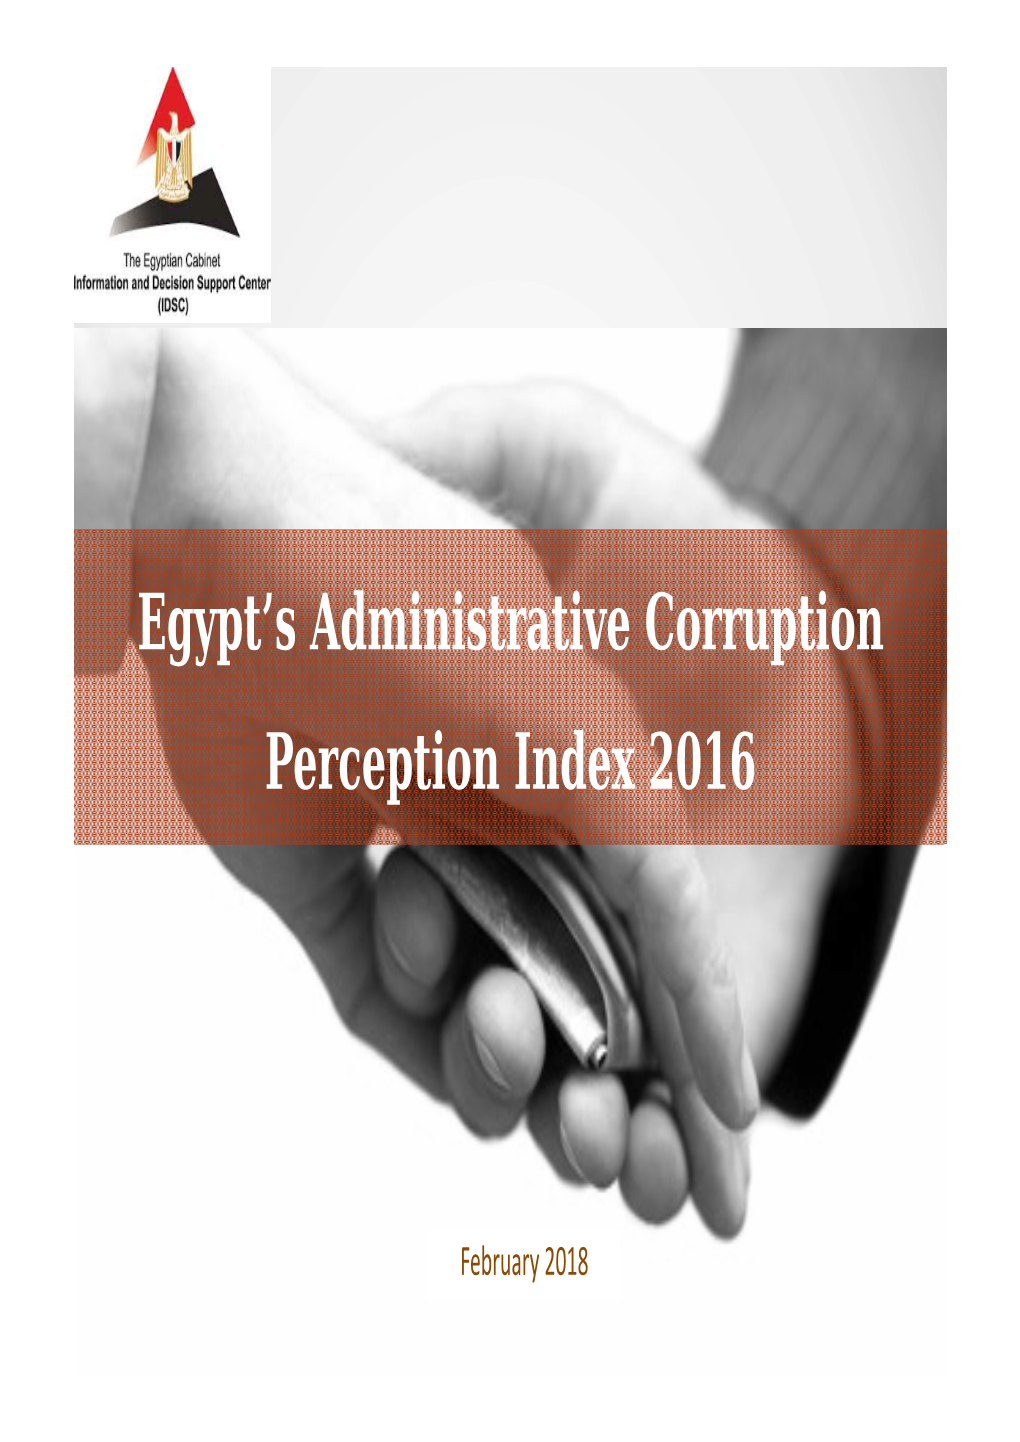 Egypt's Administrative Corruption Perception Index 2016